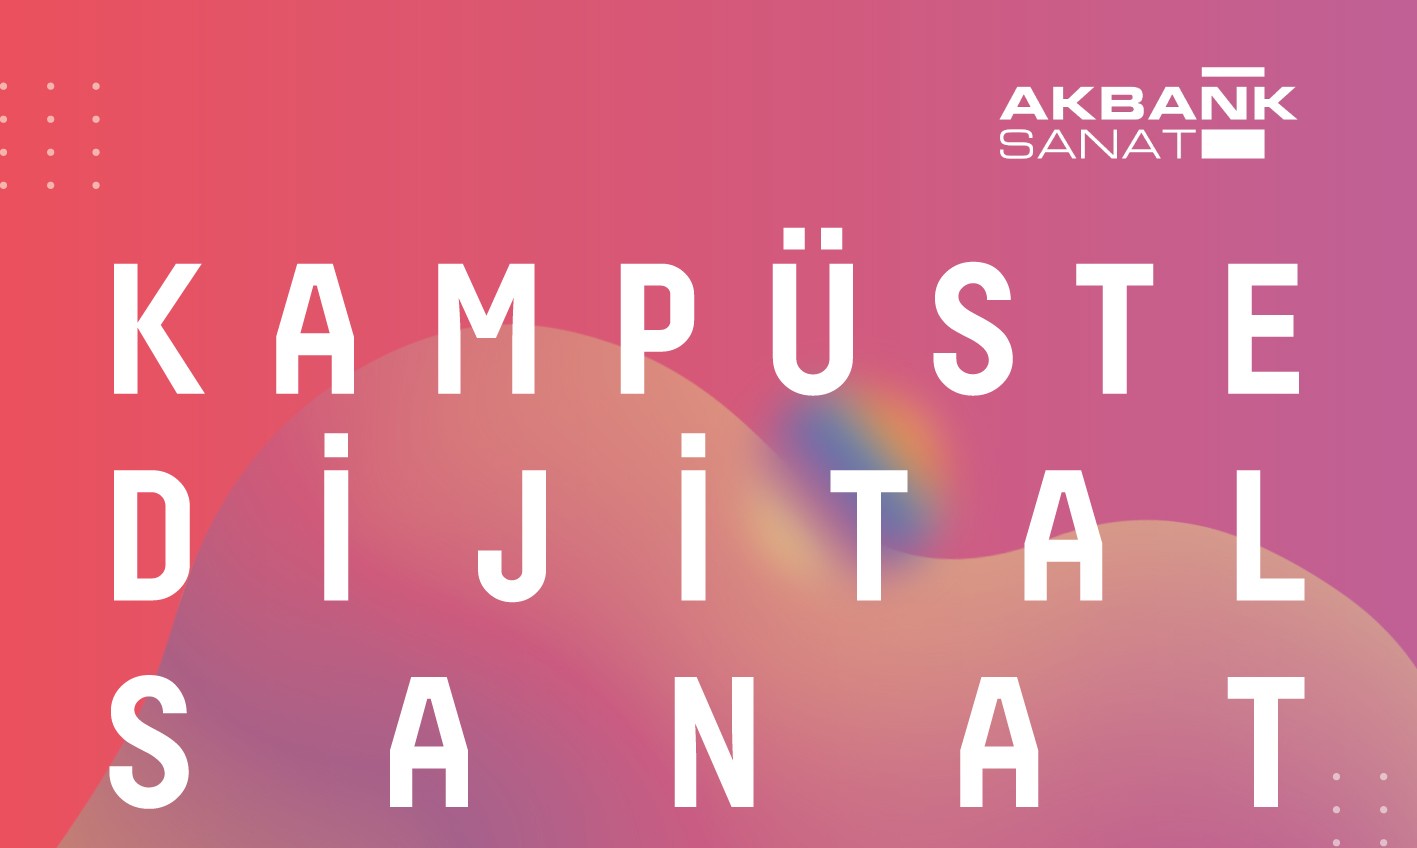 Kampuste_Dijital_Sanat_AKBANK_SANAT_